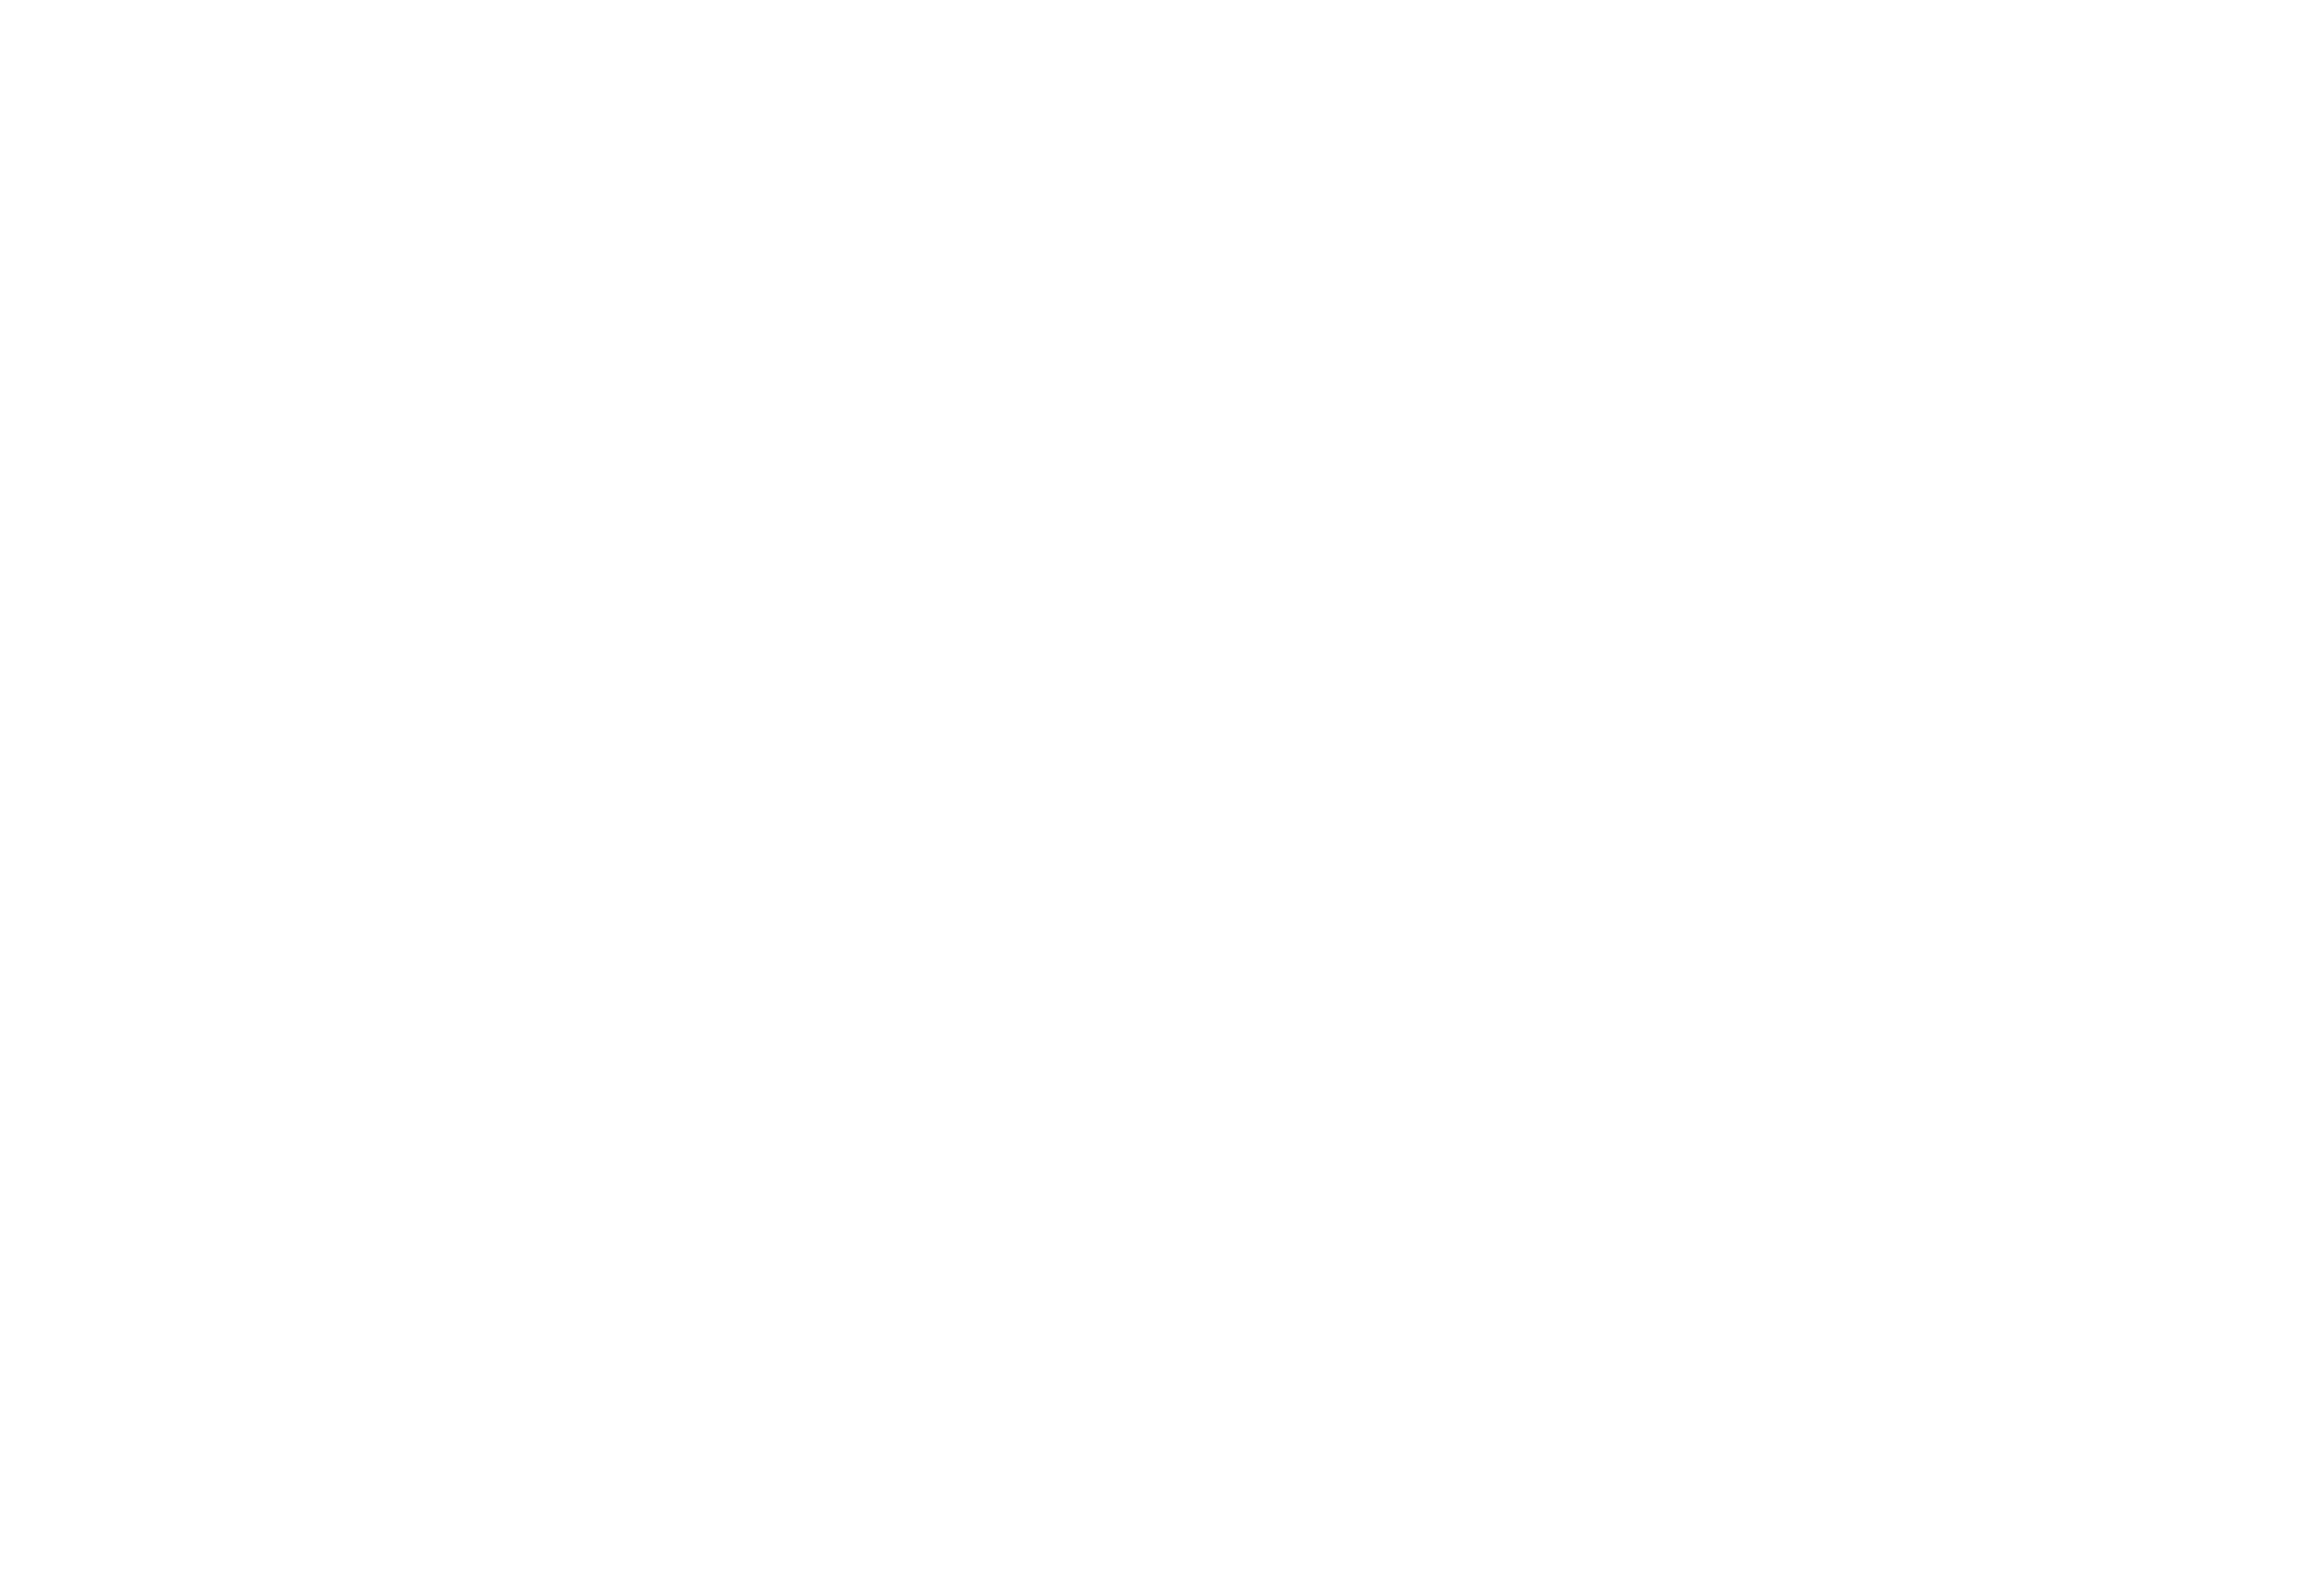 Glasgow City Innovation District